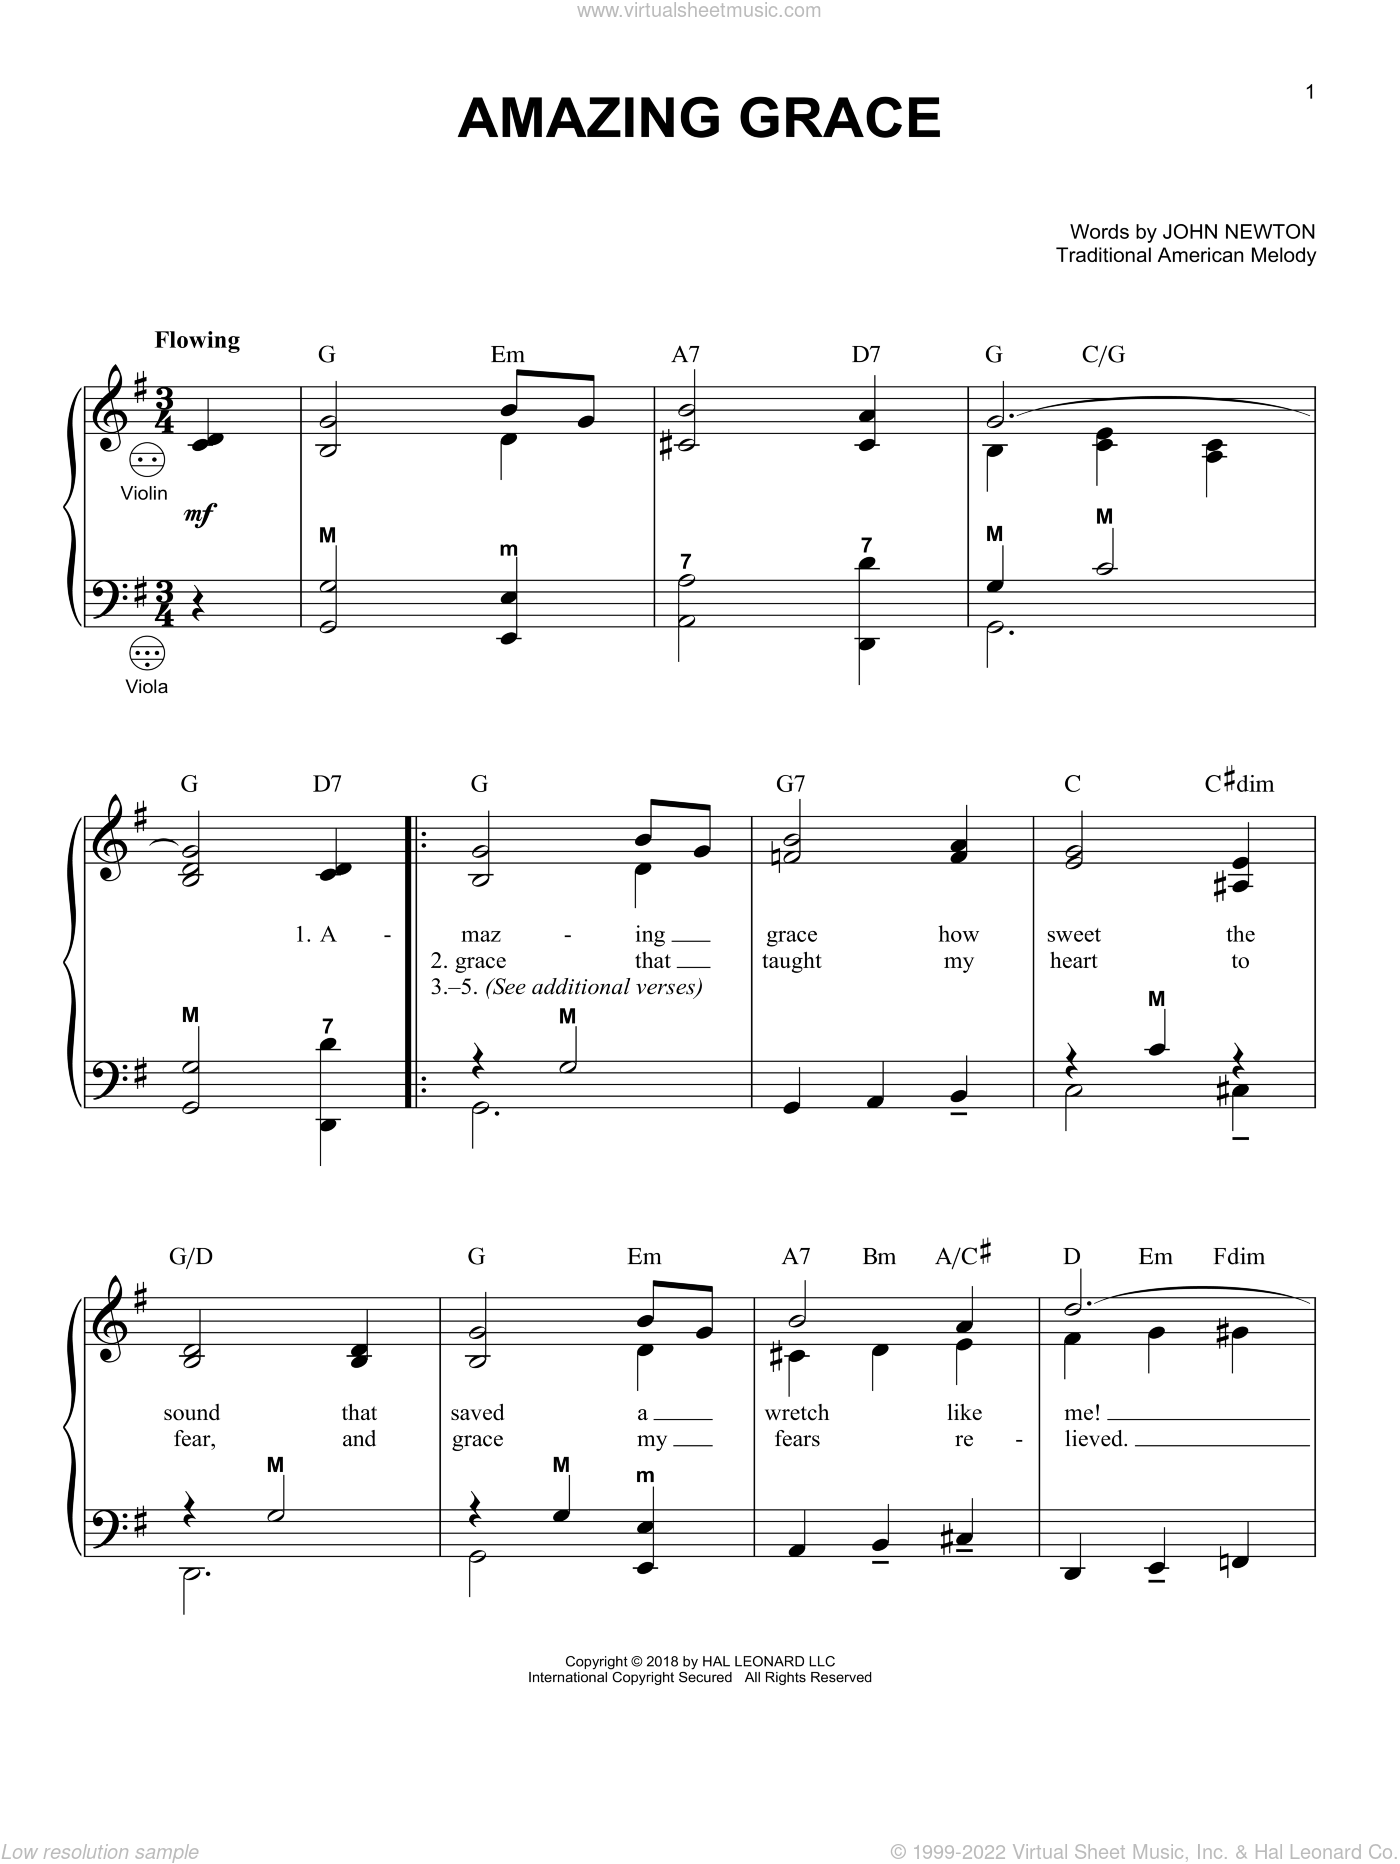 Newton - Amazing Grace sheet music for accordion [PDF]